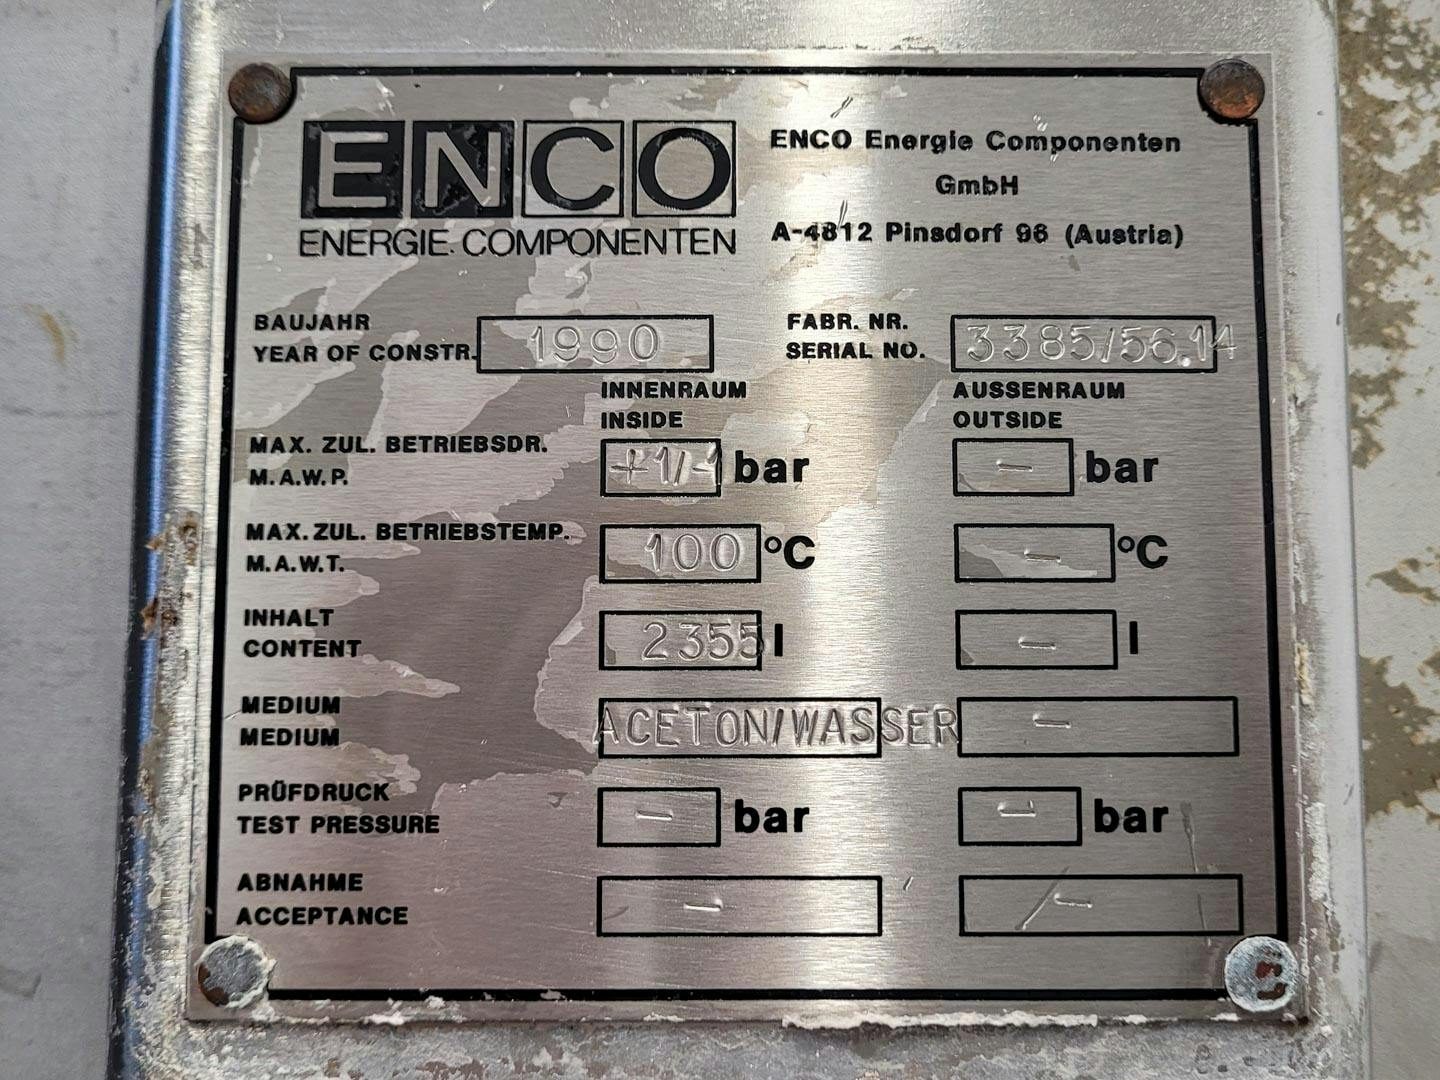 Enco 2355 Ltr. - Recipiente de pressão - image 7